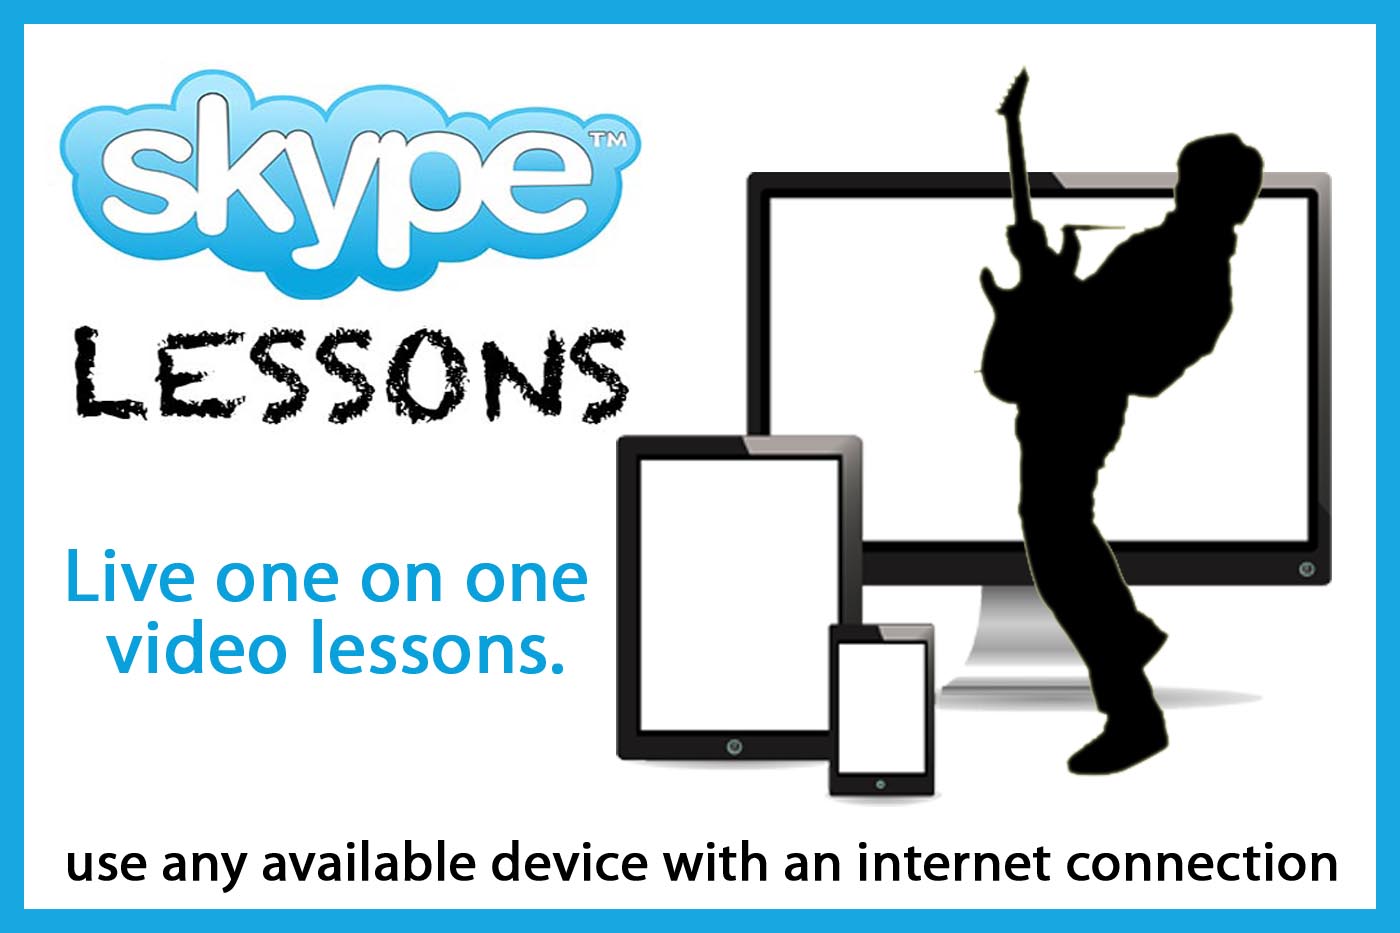 skype guitar lessons video 1